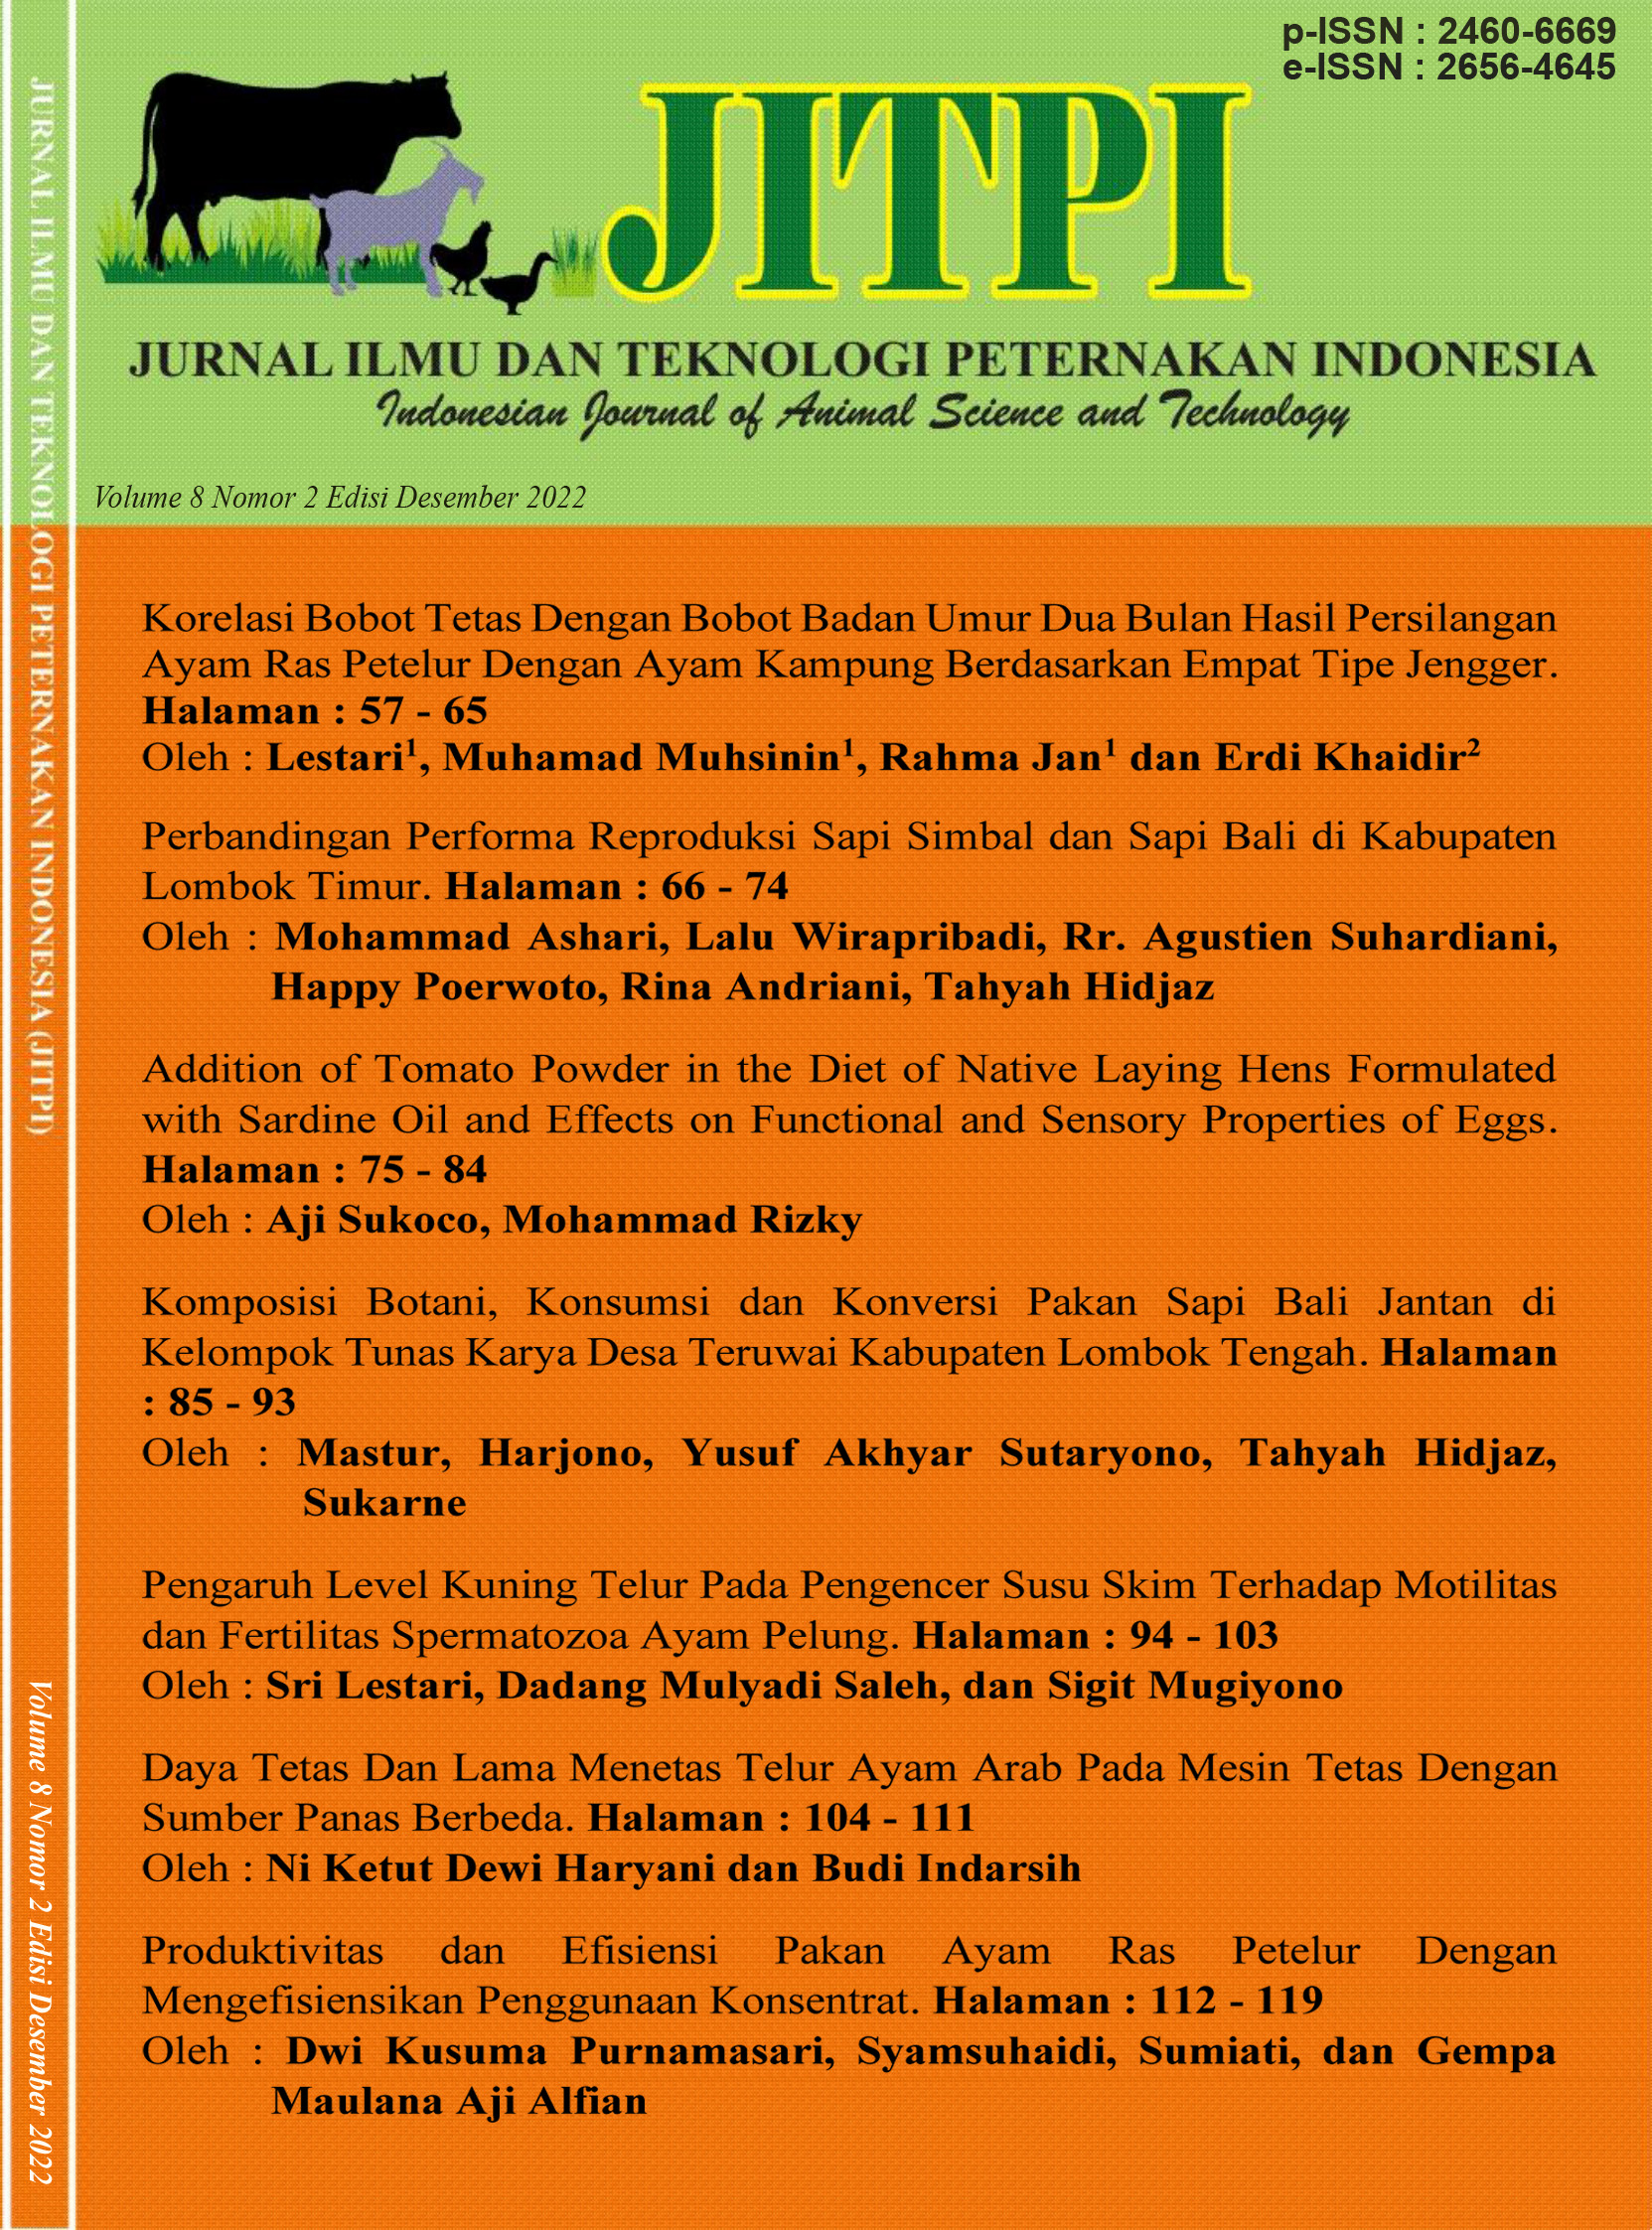 					View Vol. 8 No. 2 (2022): Jurnal Ilmu dan Teknologi Peternakan Indonesia (JITPI) Indonesian Journal of Animal Science and Technology
				